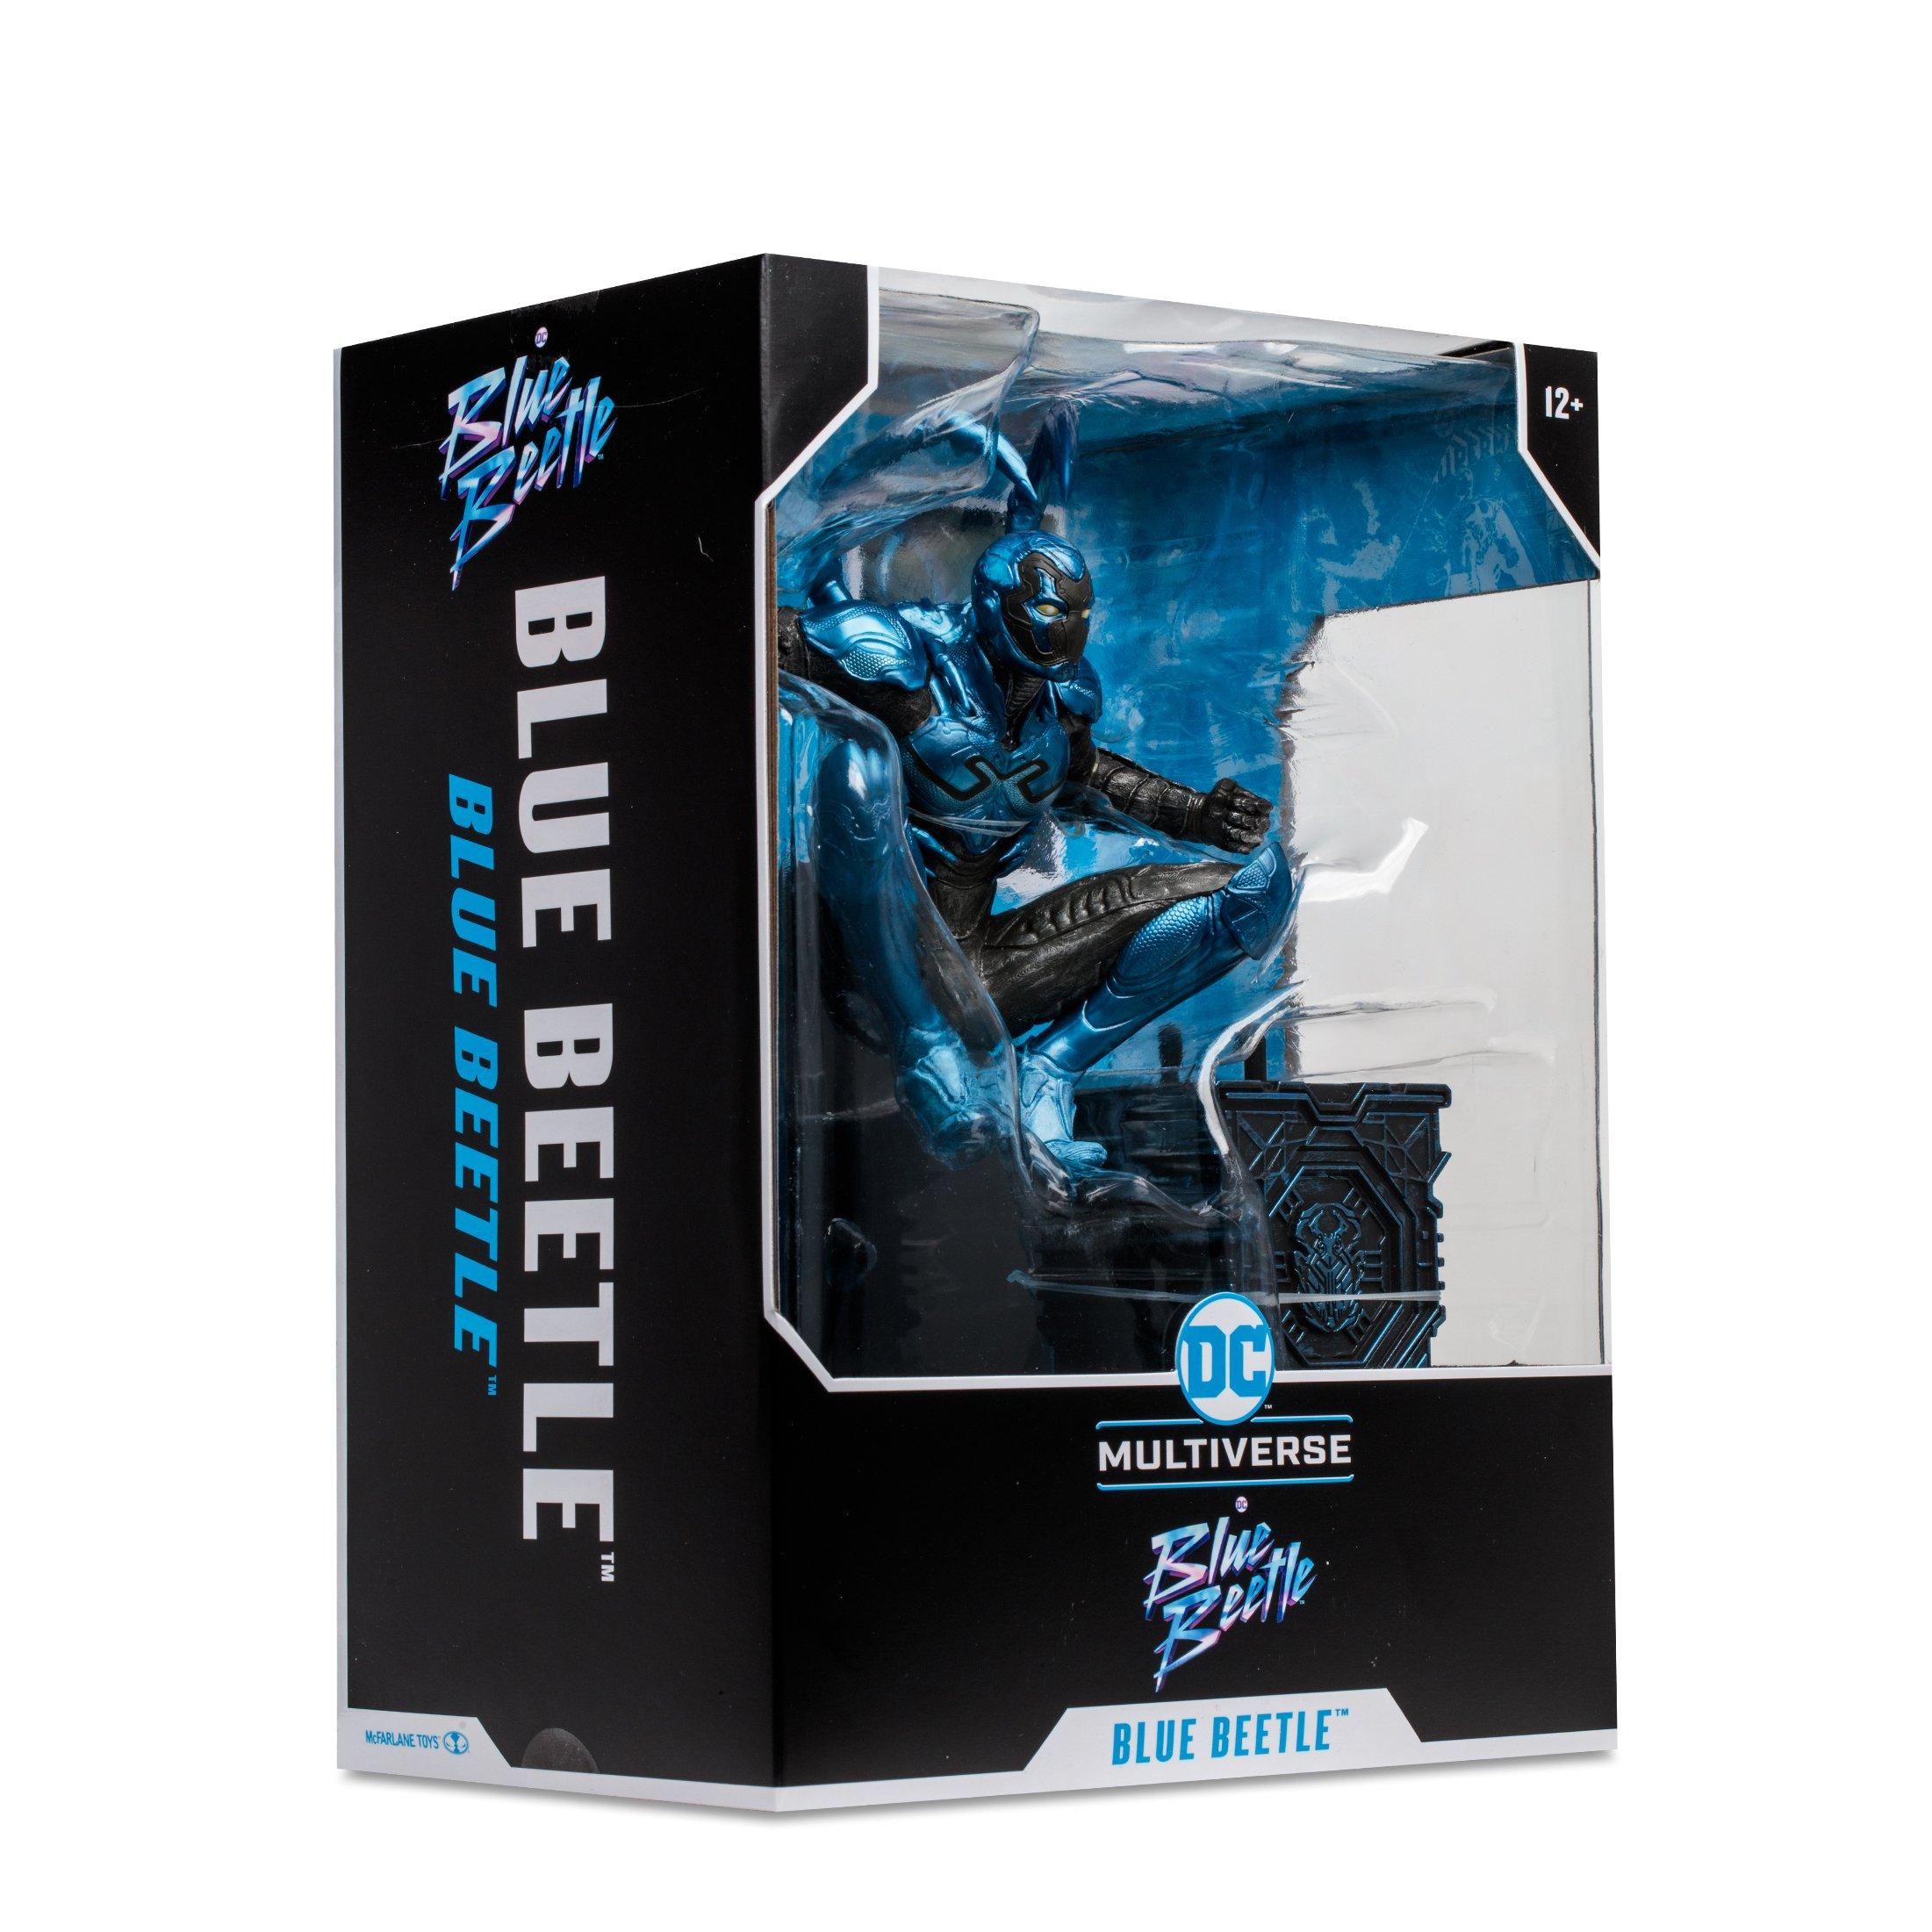 McFarlane - DC Multiverse - Blue Beetle Movie - Blue Beetle 12 Statue